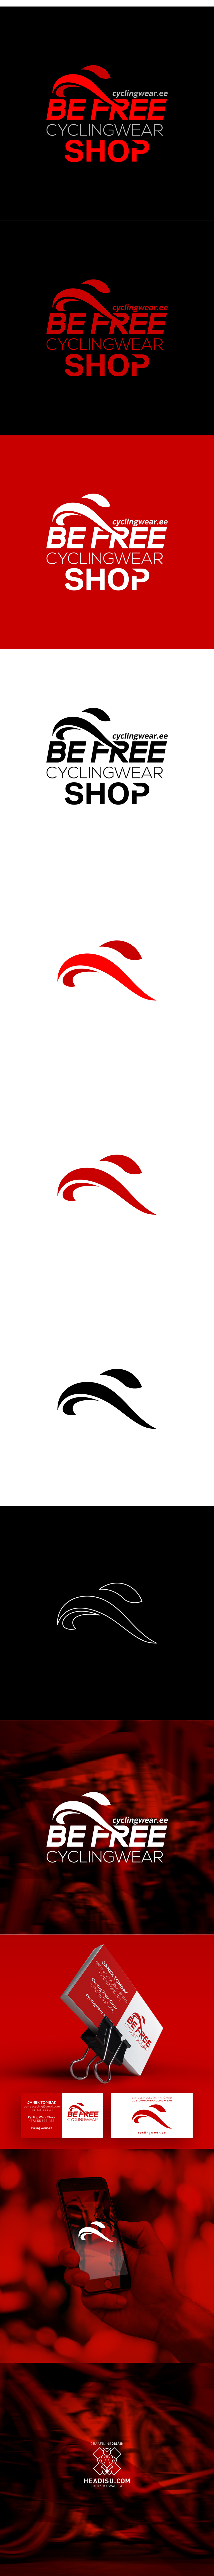 BeFreeCycling-logo-2